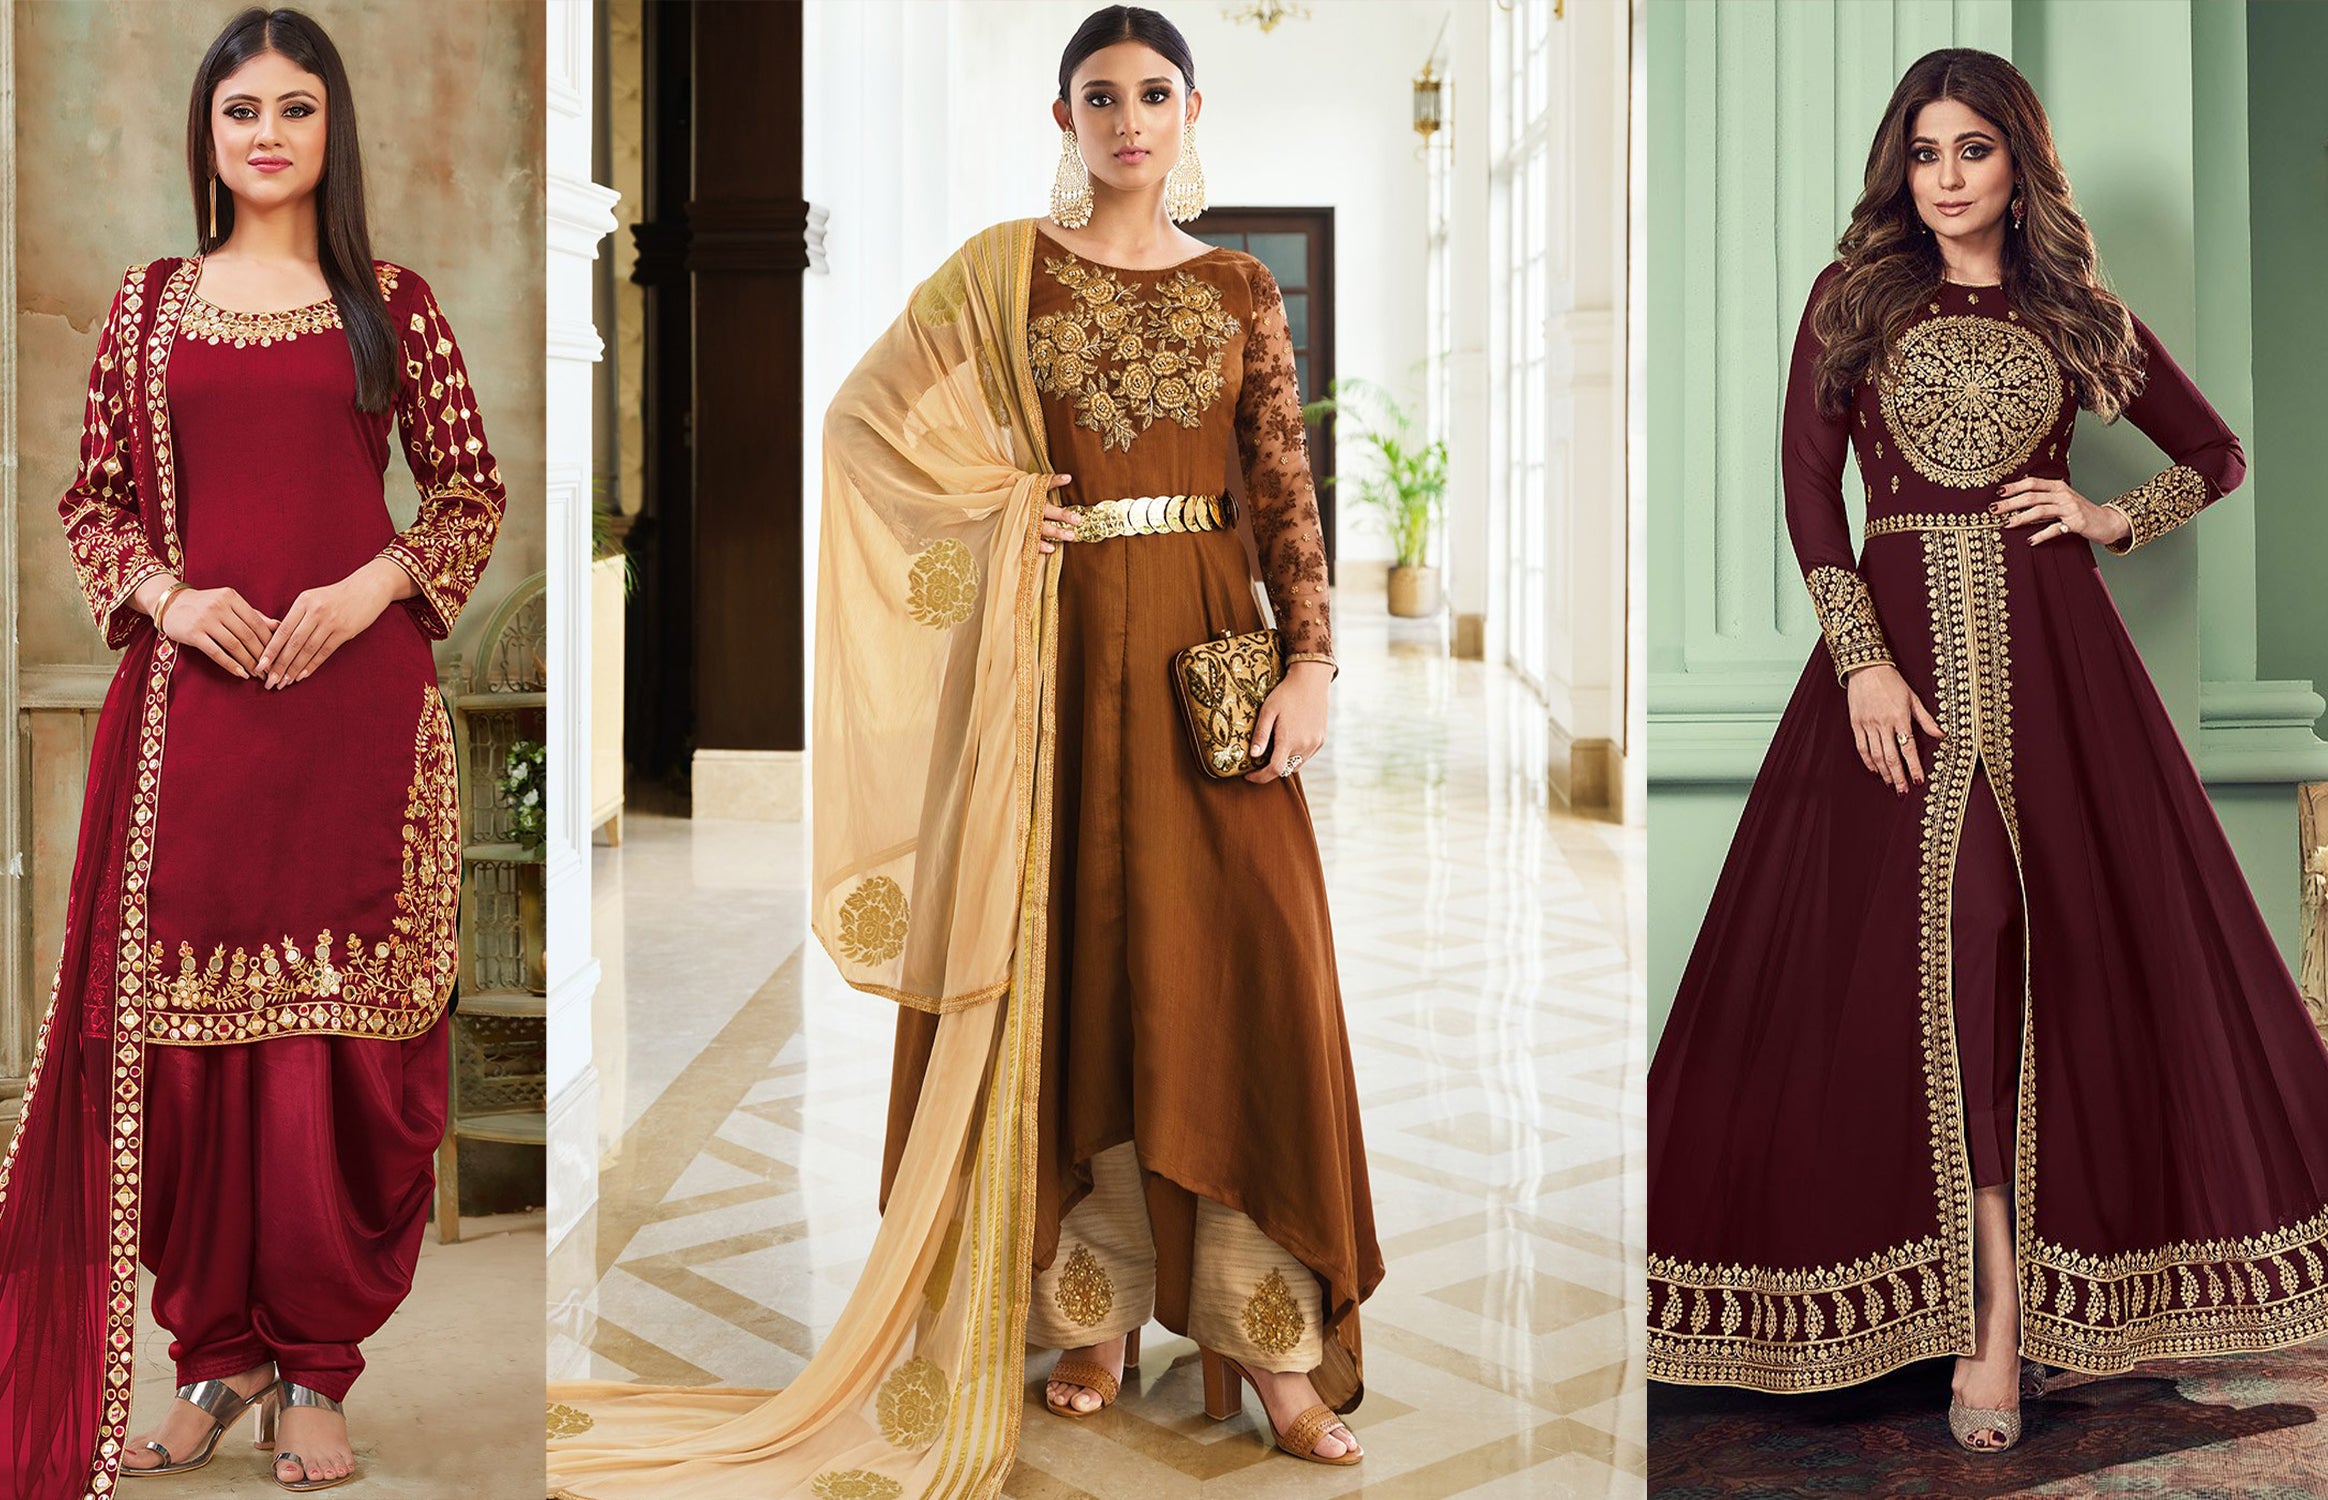 Buy online Soft Colors Women's Skinny Fit Ethnic Wear Churidar